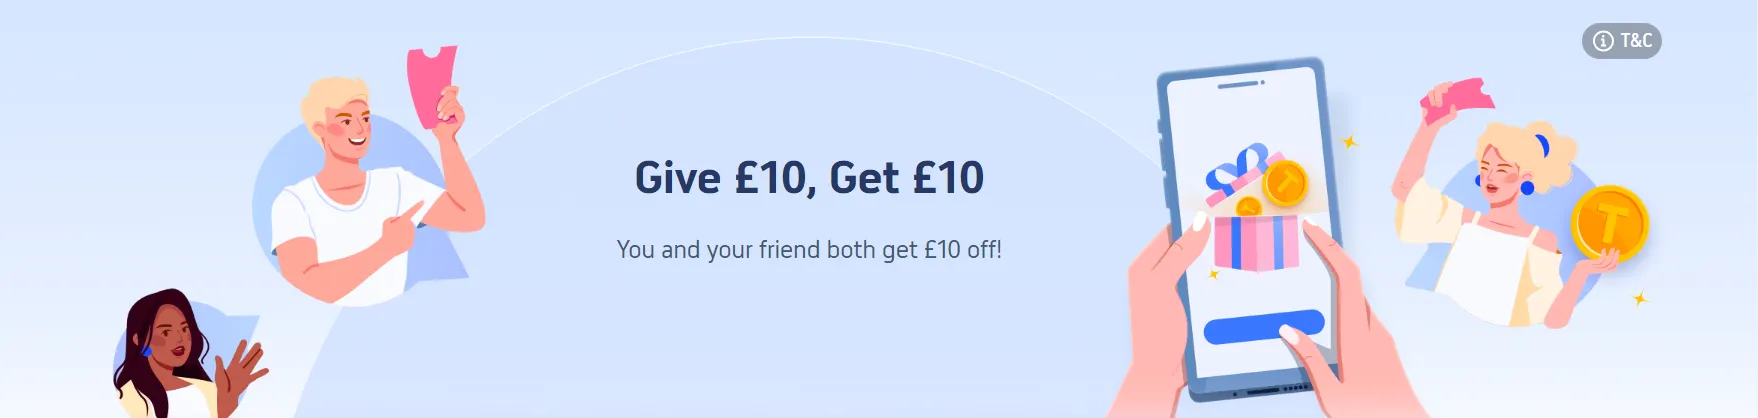 Trip.com Promo Code UK: Refer a Friend and Earn £10